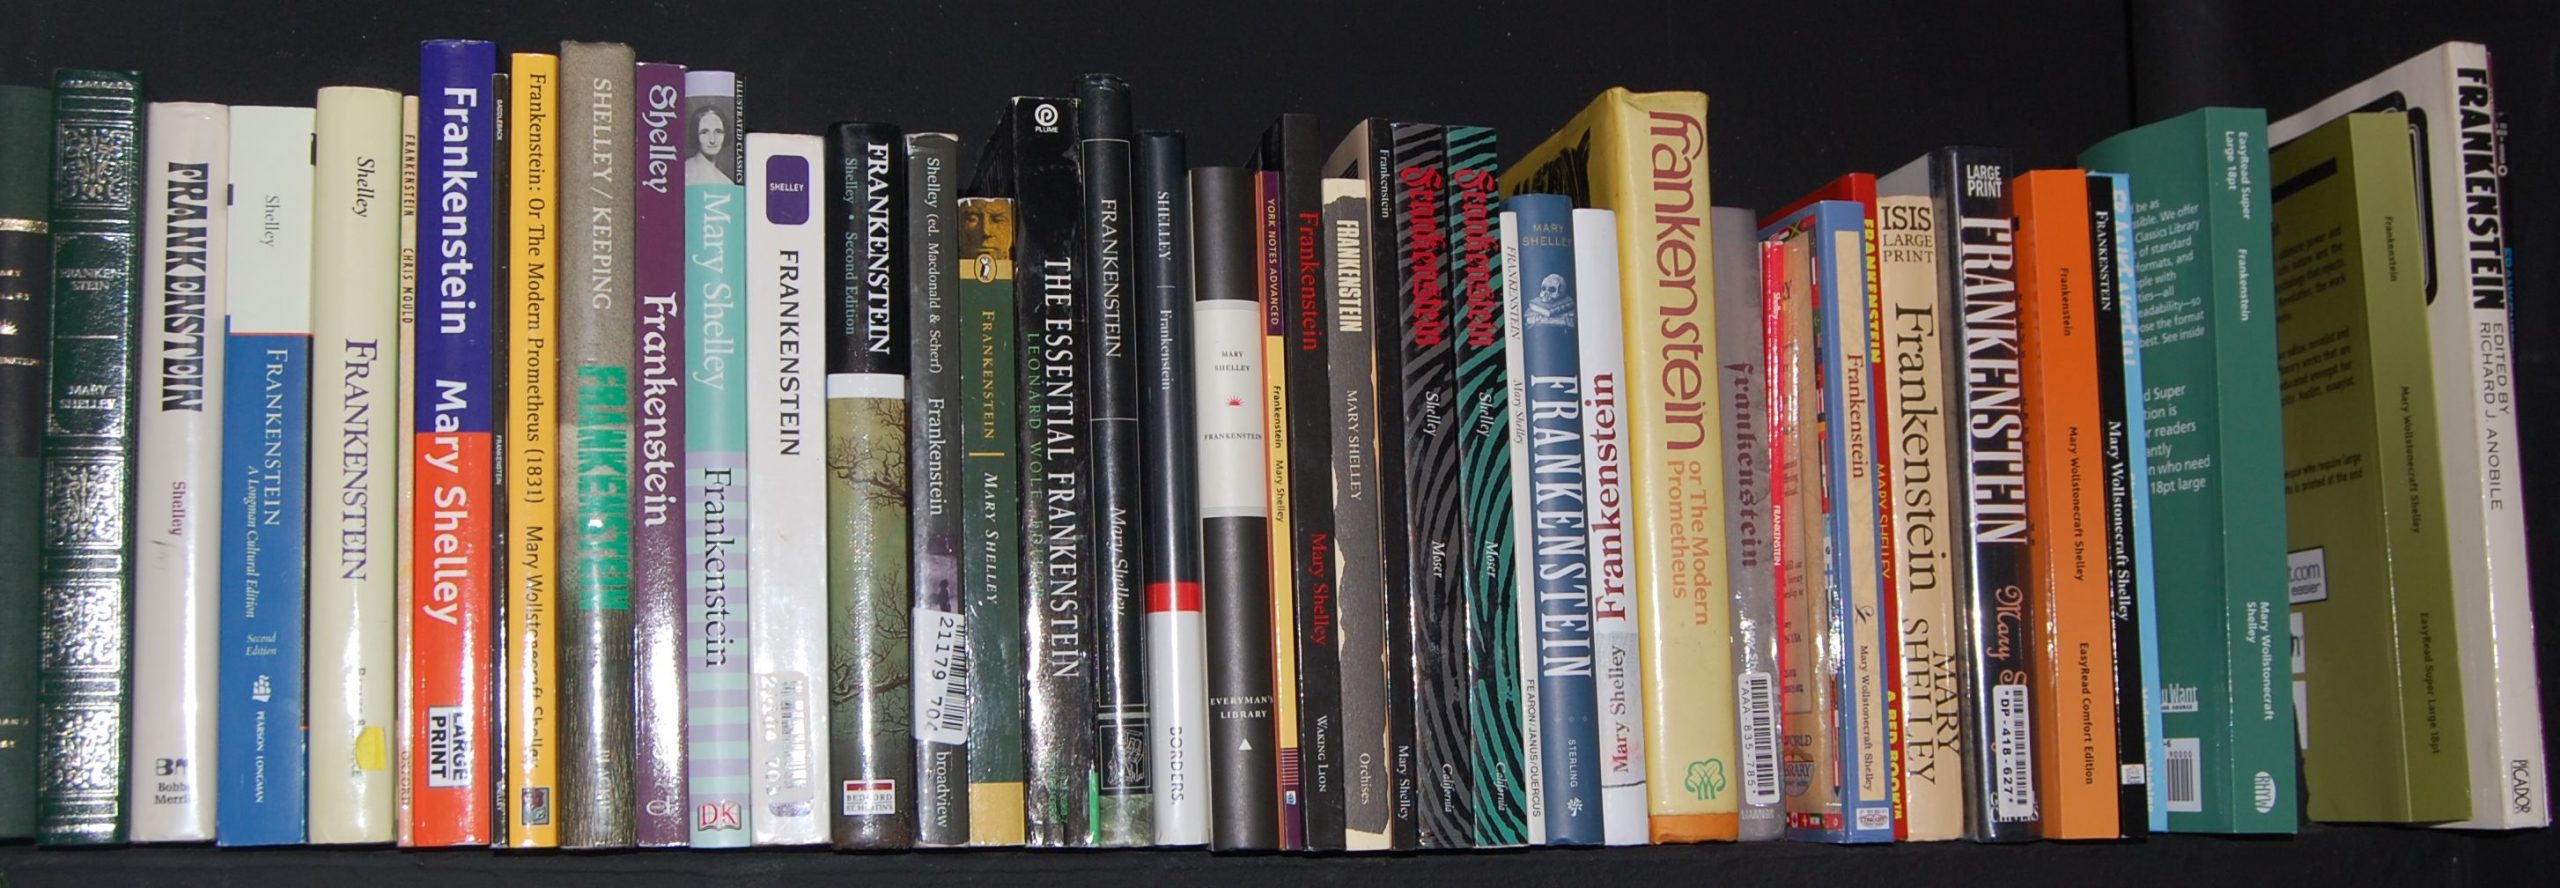 Editions of Frankenstien books on shelf